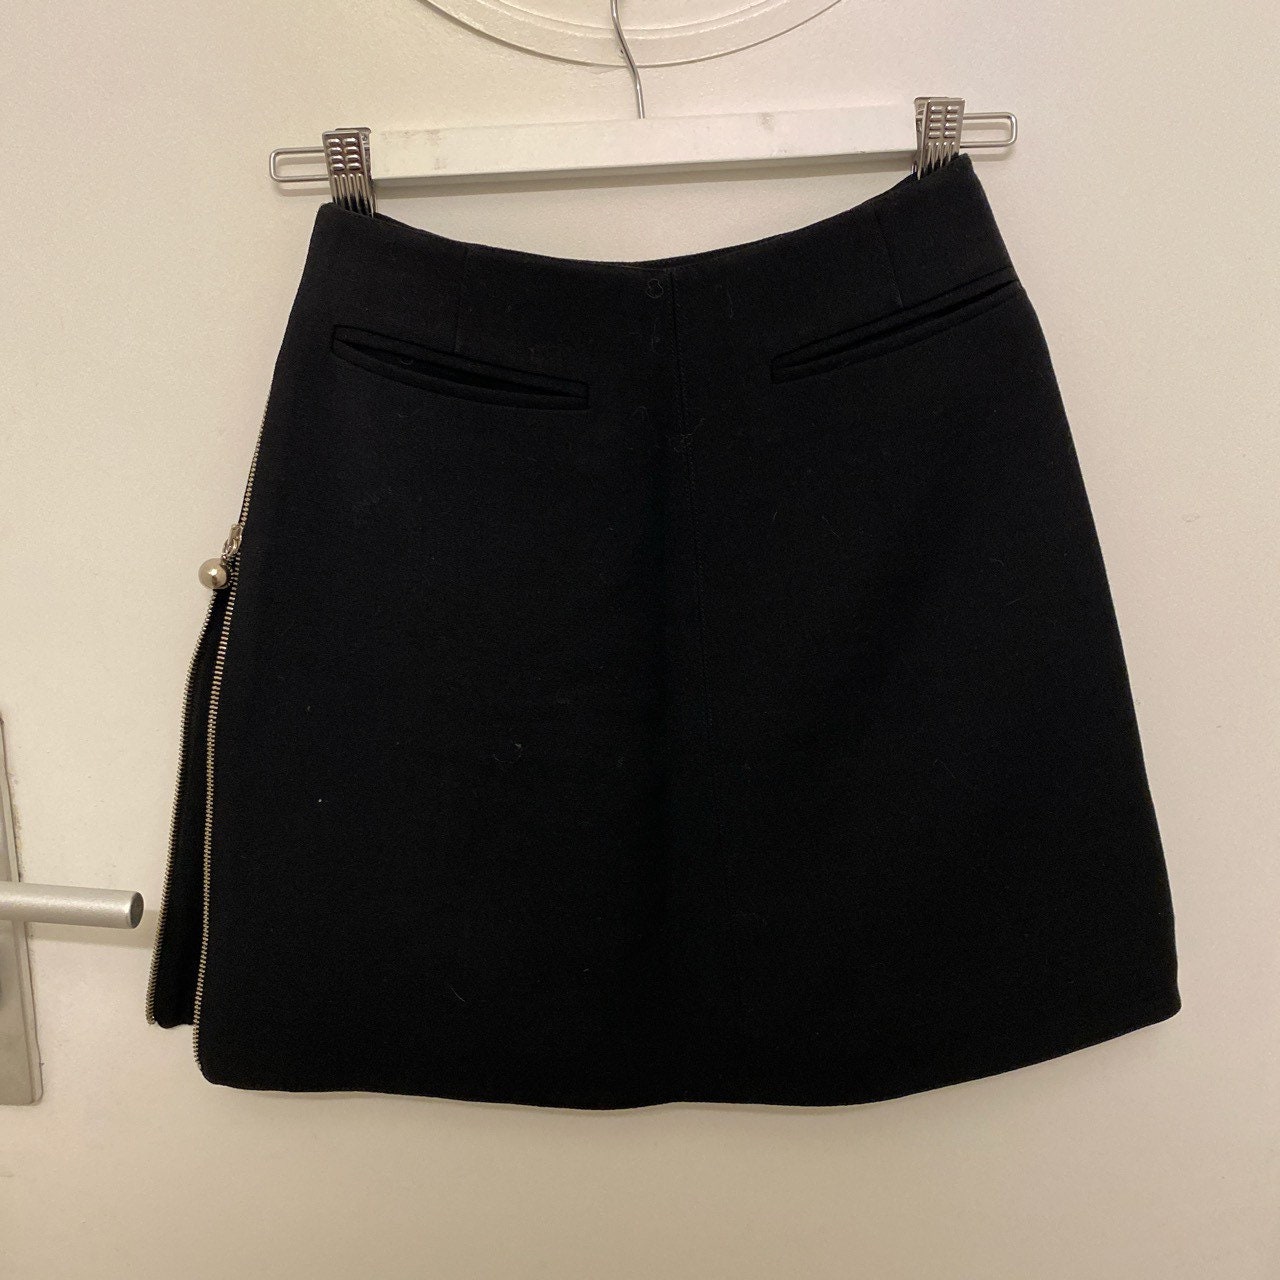 Kleding Gender-neutrale kleding volwassenen Kilts en rokken Prachtig gemaakt Claude Montana zwarte mini rok jupe met side zip detail 